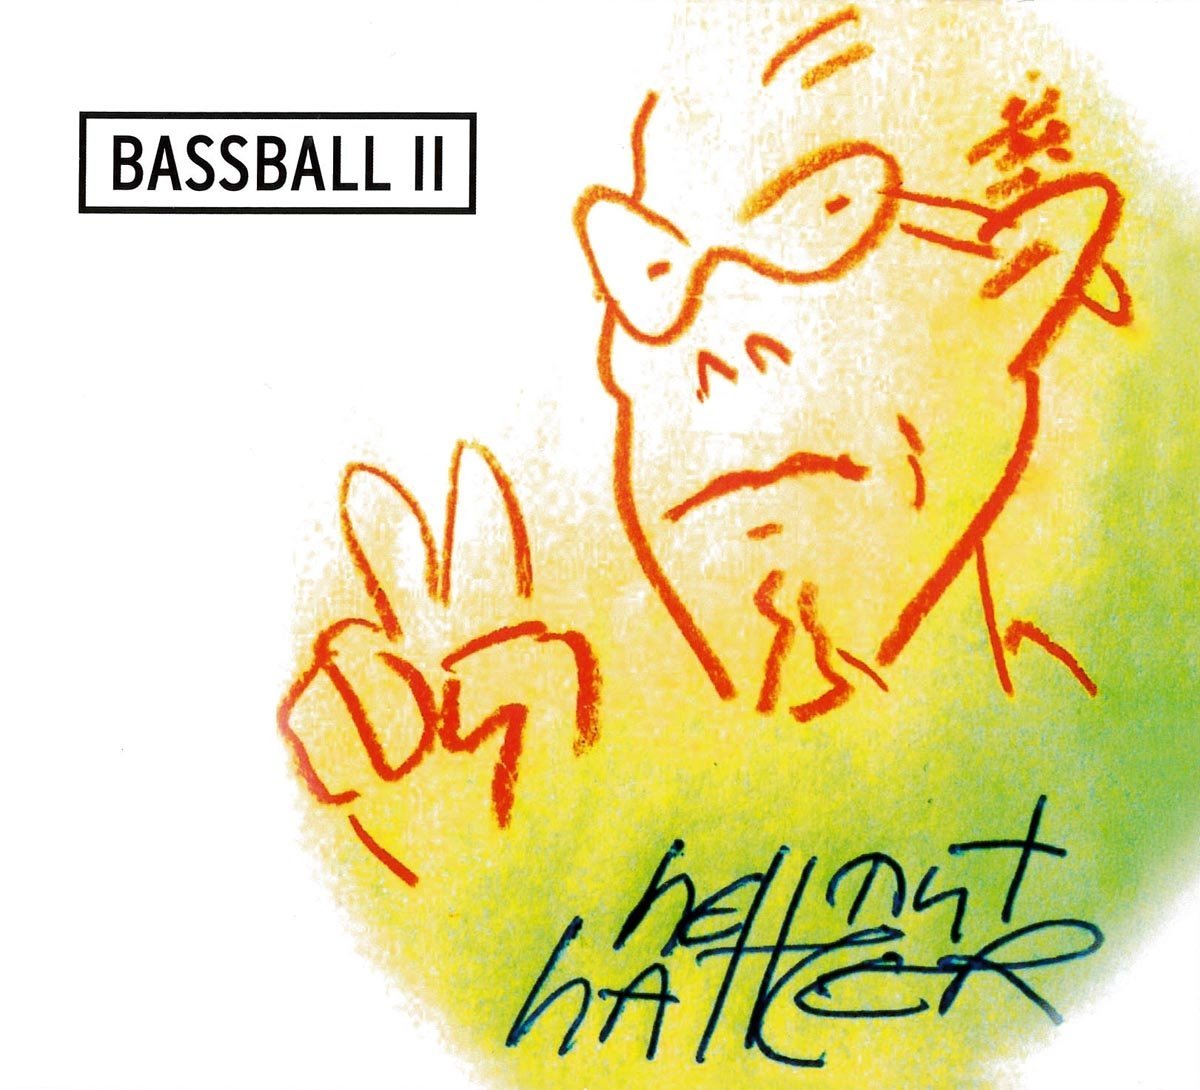 jazz 08 17 Hattler Bassball